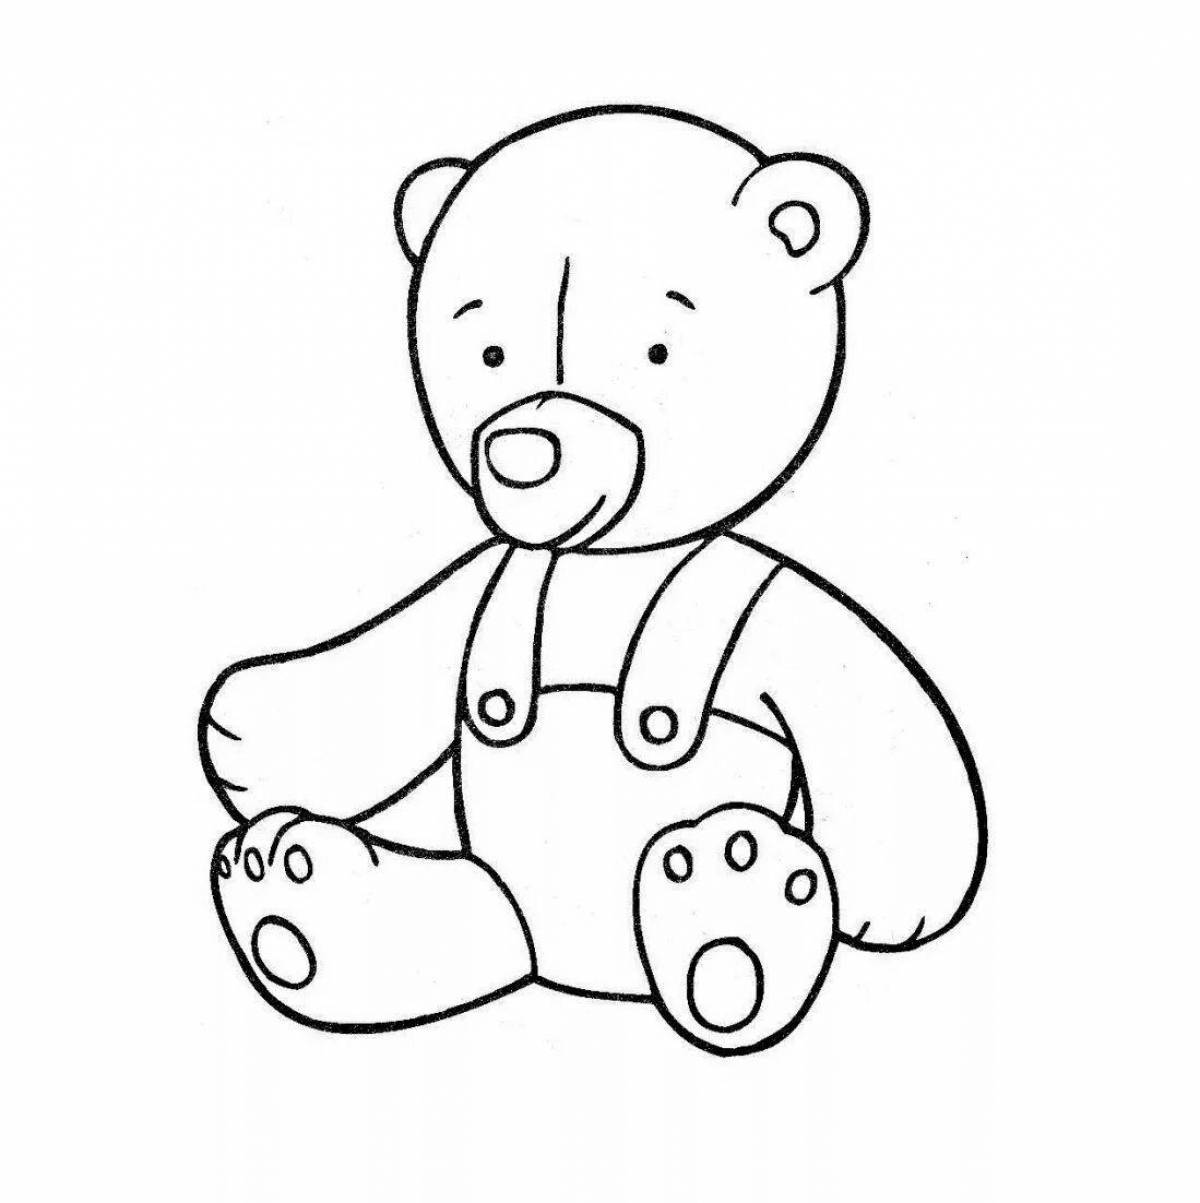 Magic bear coloring book